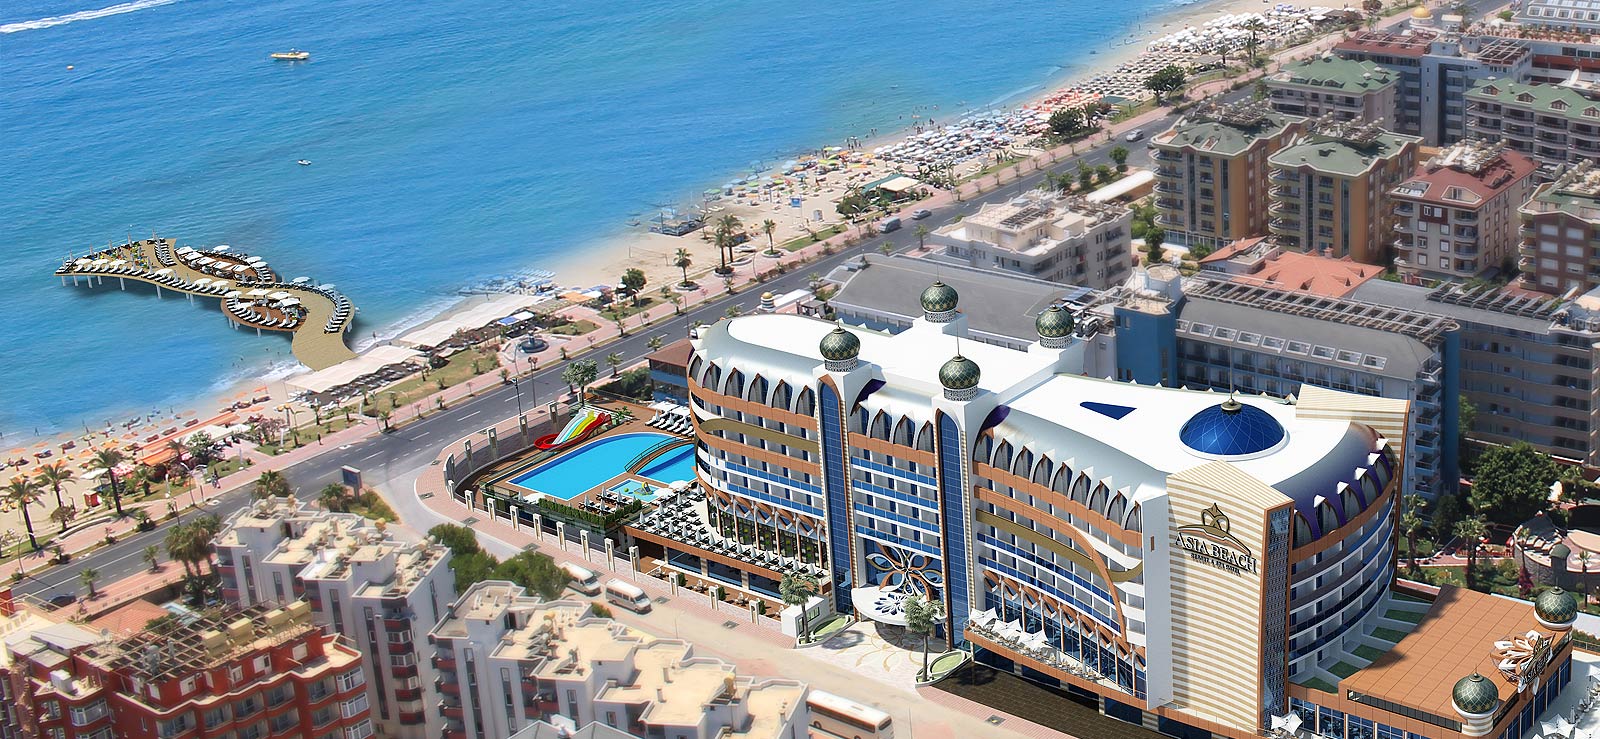 Asia Beach Resort Hotel & Spa